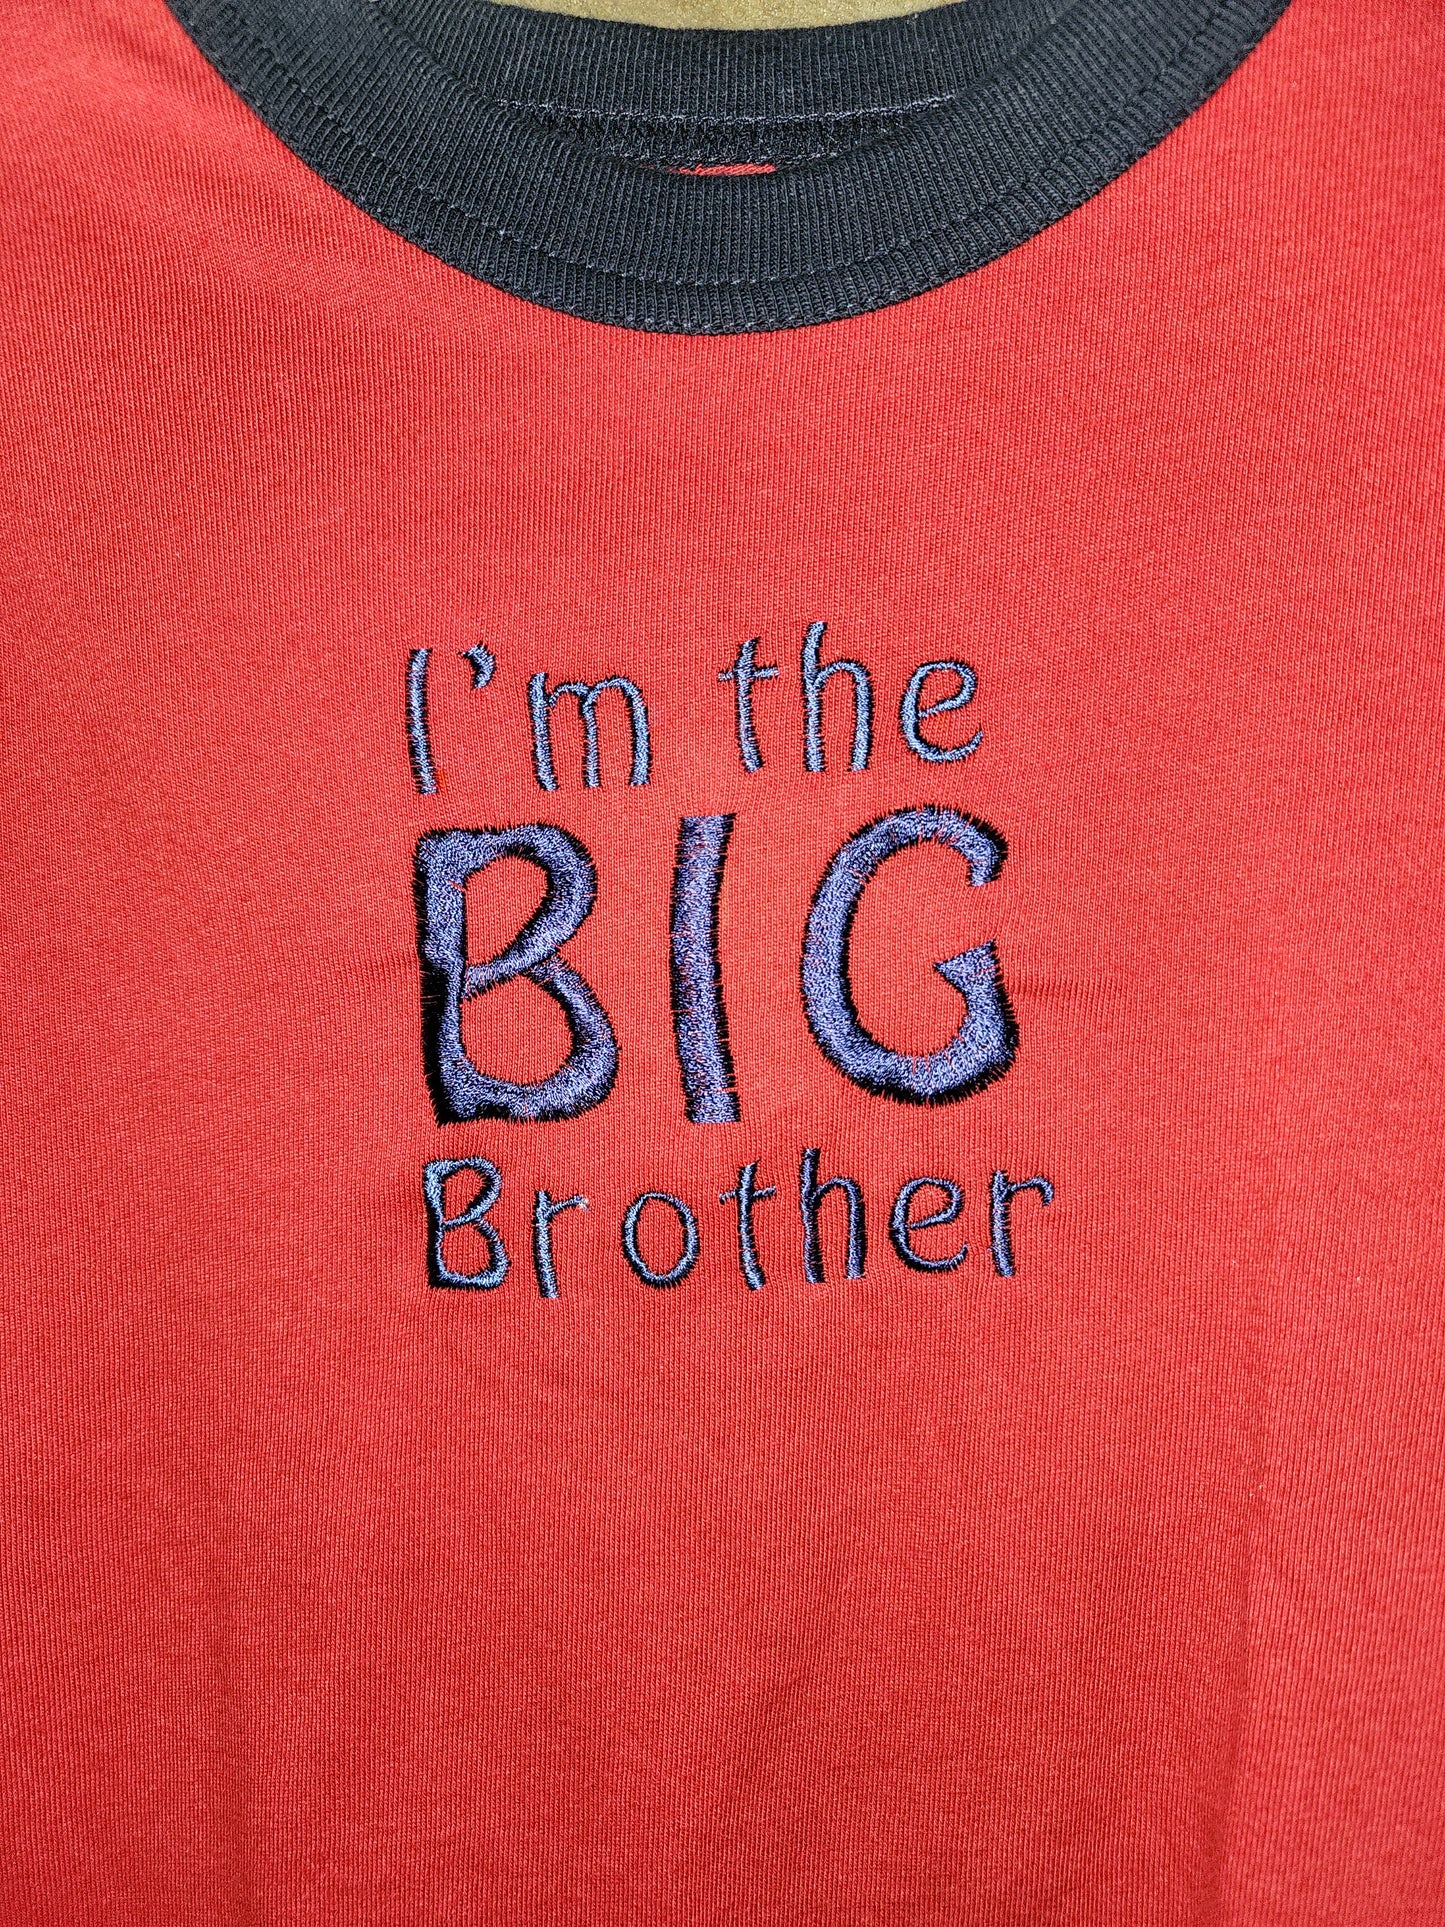 Big Bro Size 4 Shirt